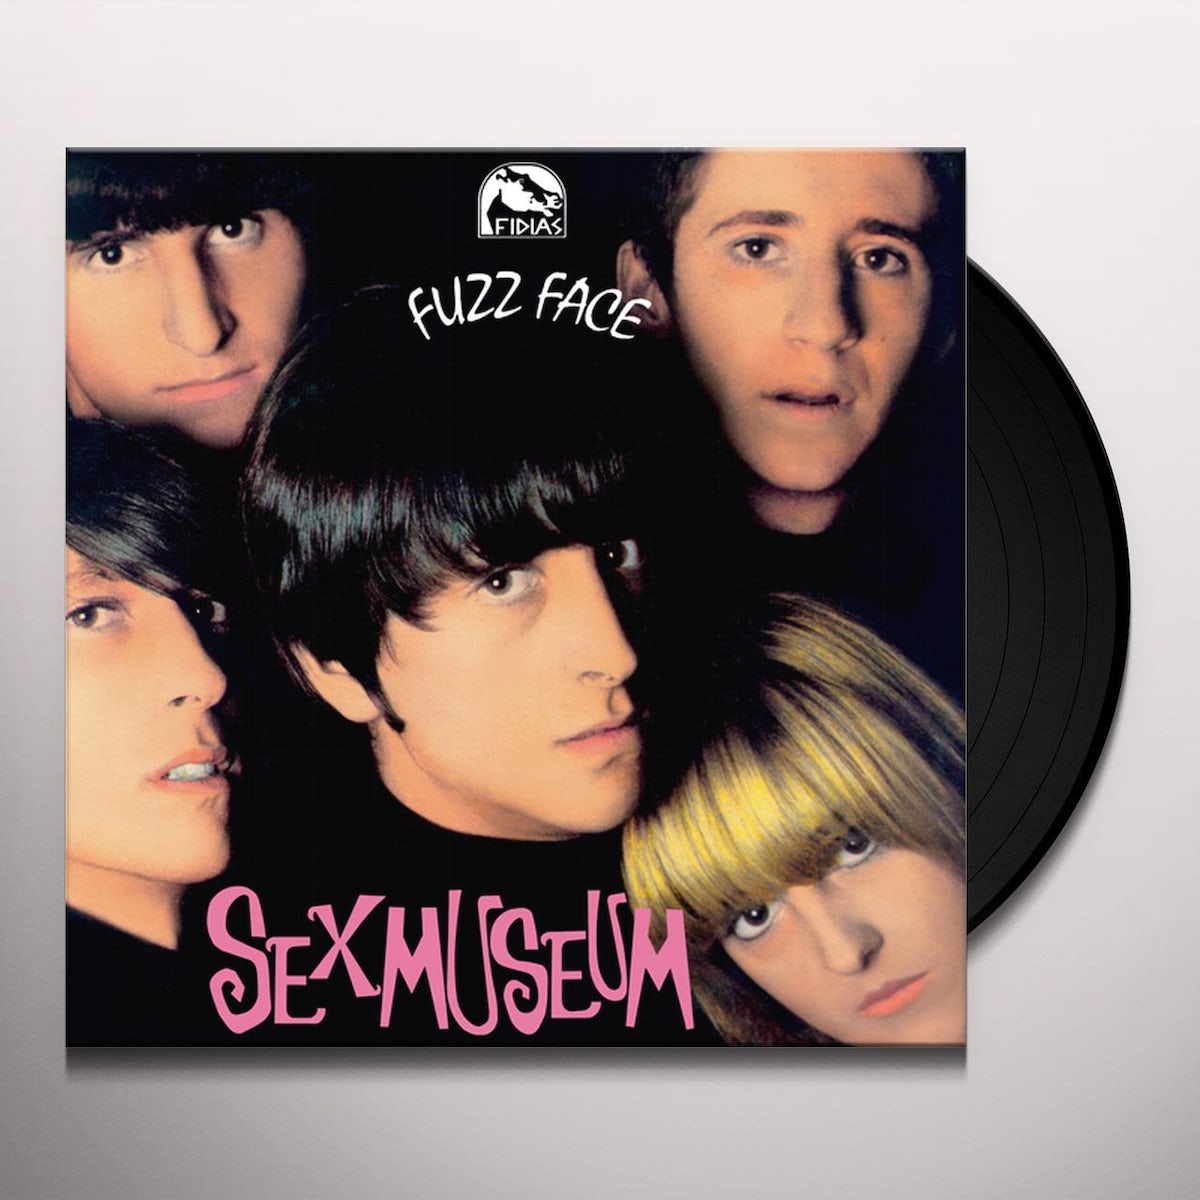 Sex Museum - Fuzz Face LP (Munster Records 30th Anniversary Limited Edition w/Bonus CD)